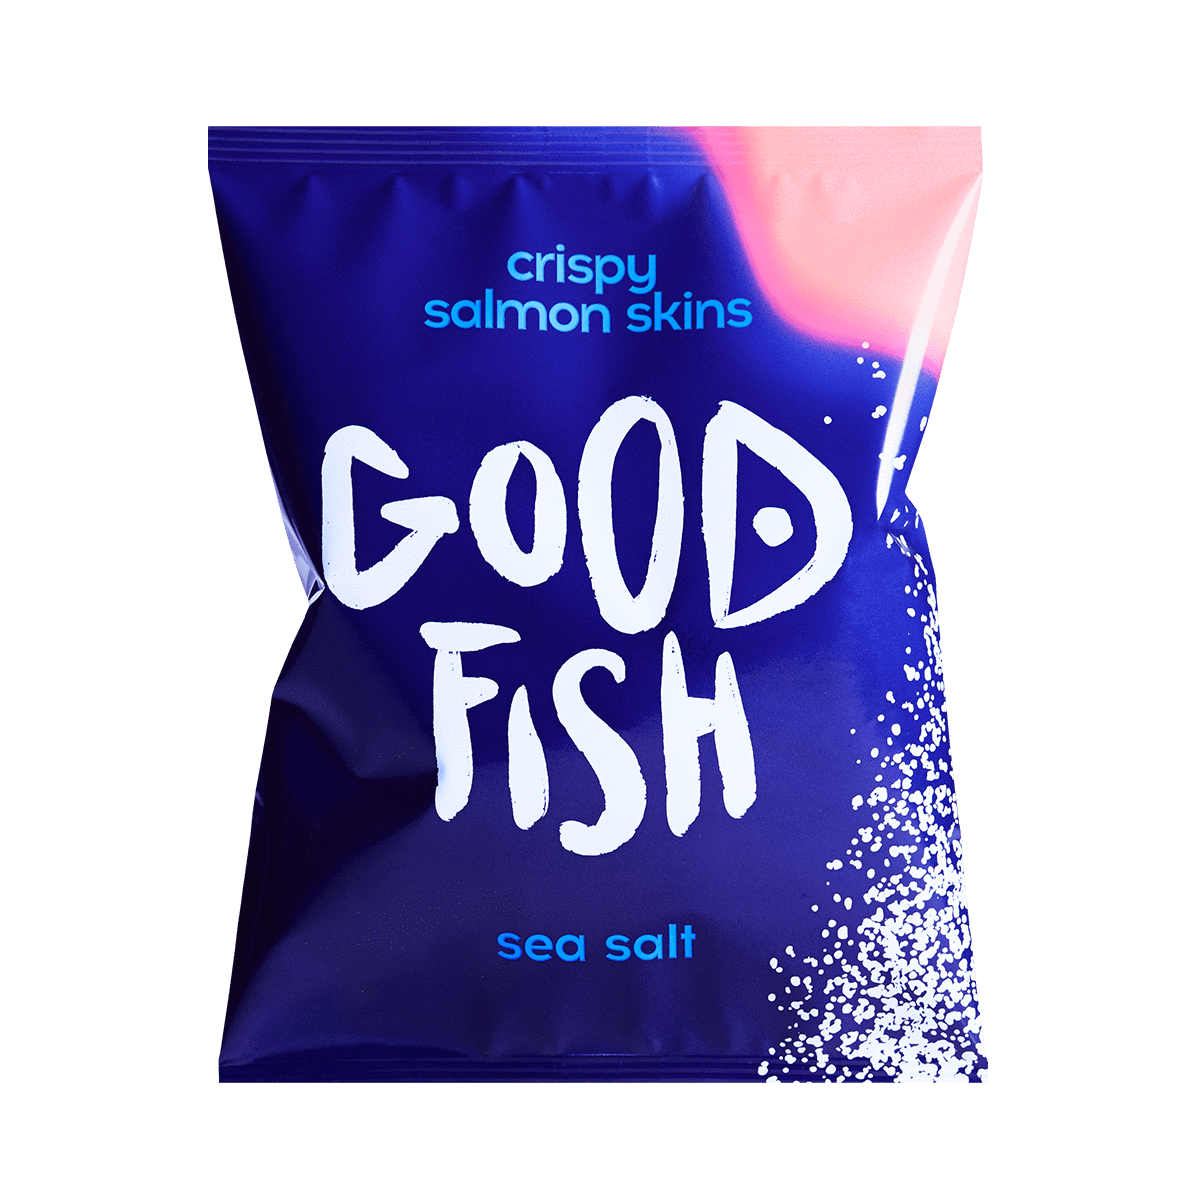 Goodfish Makes Crispy Chips From Bristol Bay Sockeye Salmon Skins